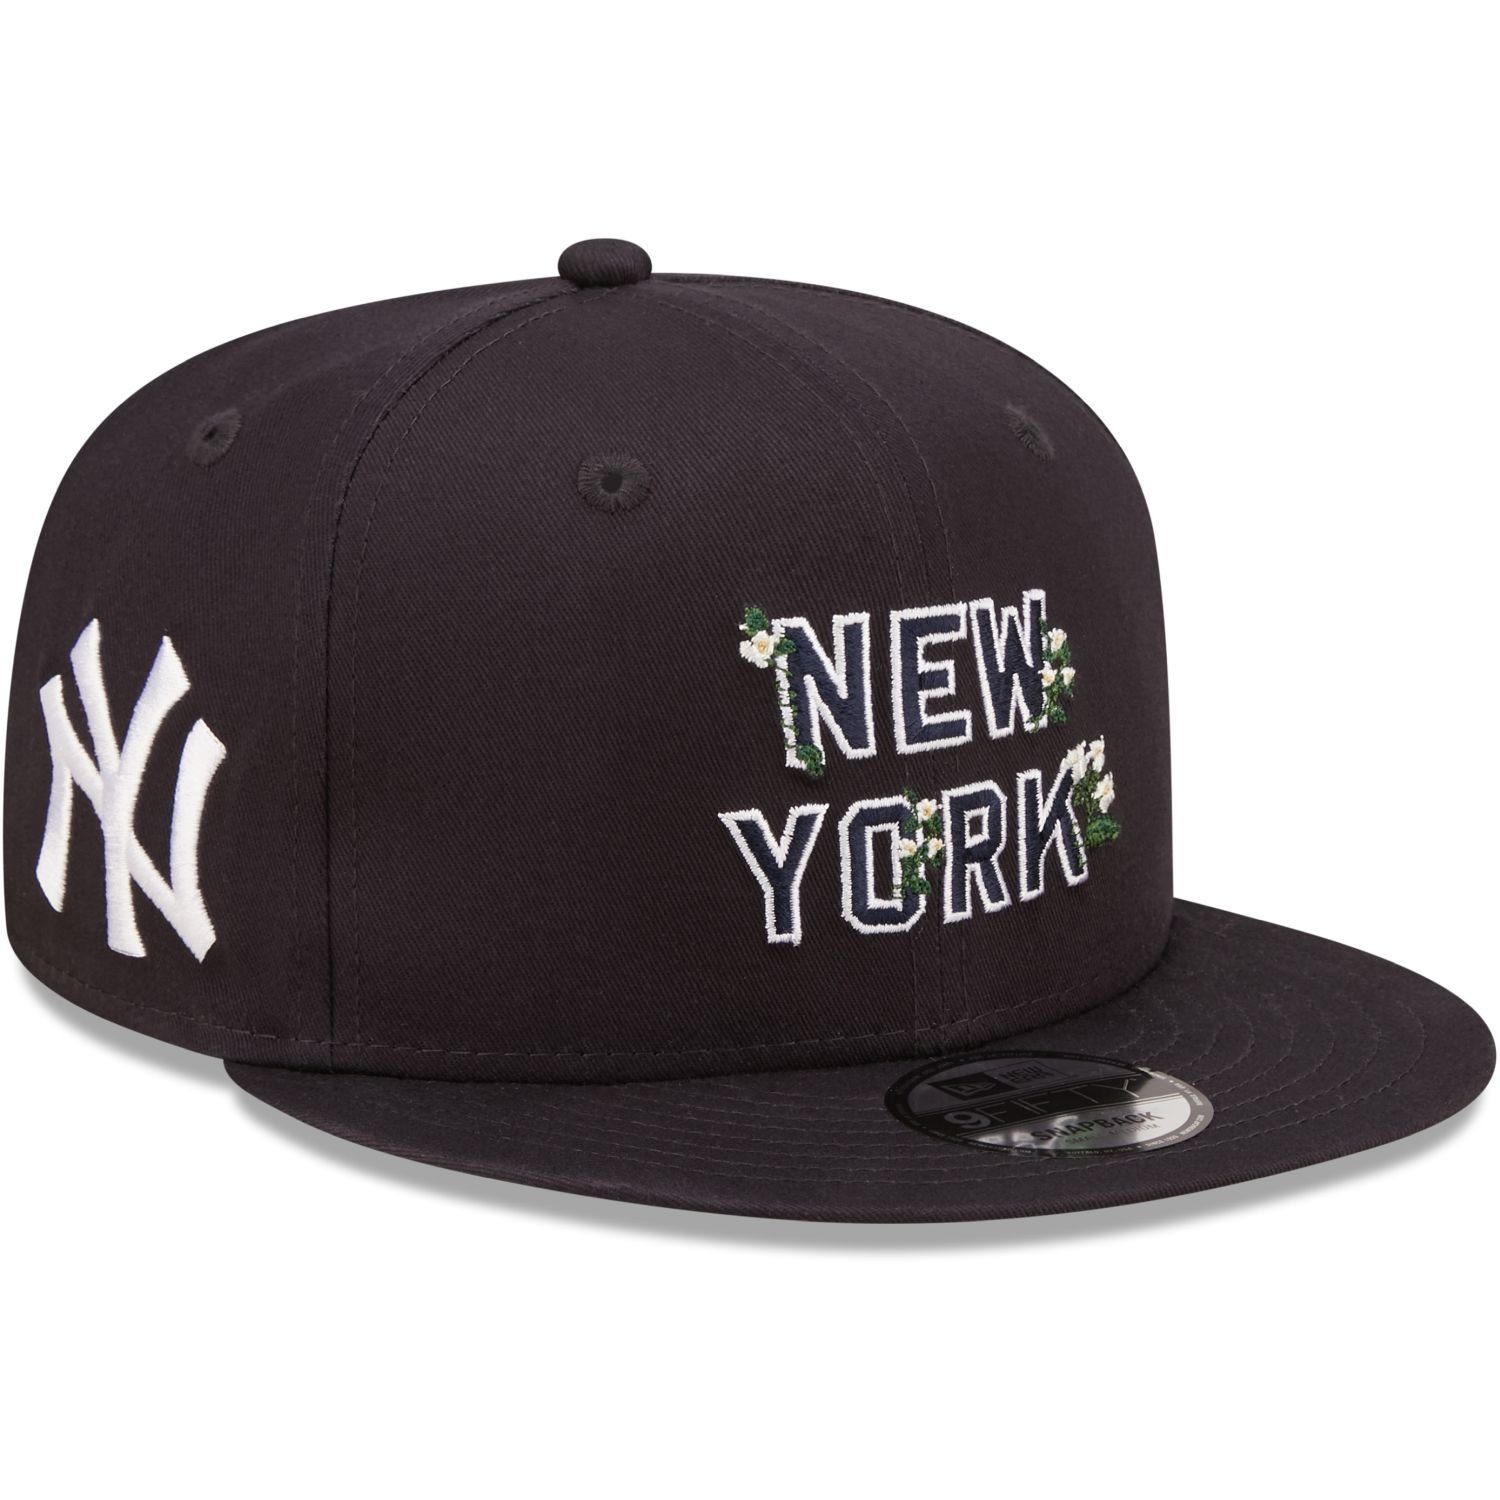 New New Snapback Era 9Fifty York Cap Yankees